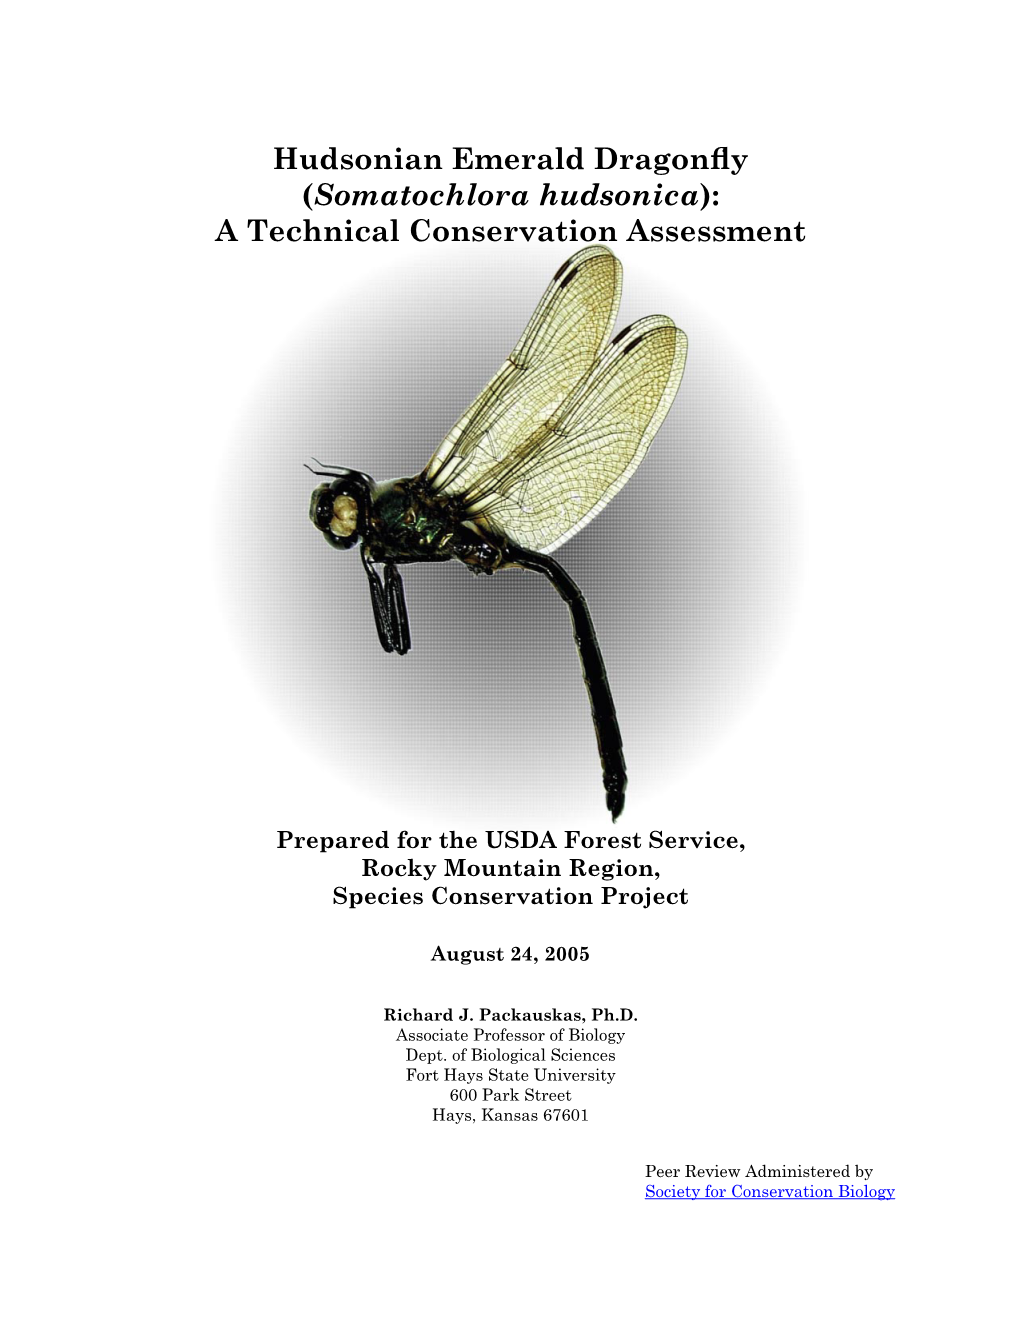 Hudsonian Emerald Dragonfly (Somatochlora Hudsonica): a Technical Conservation Assessment